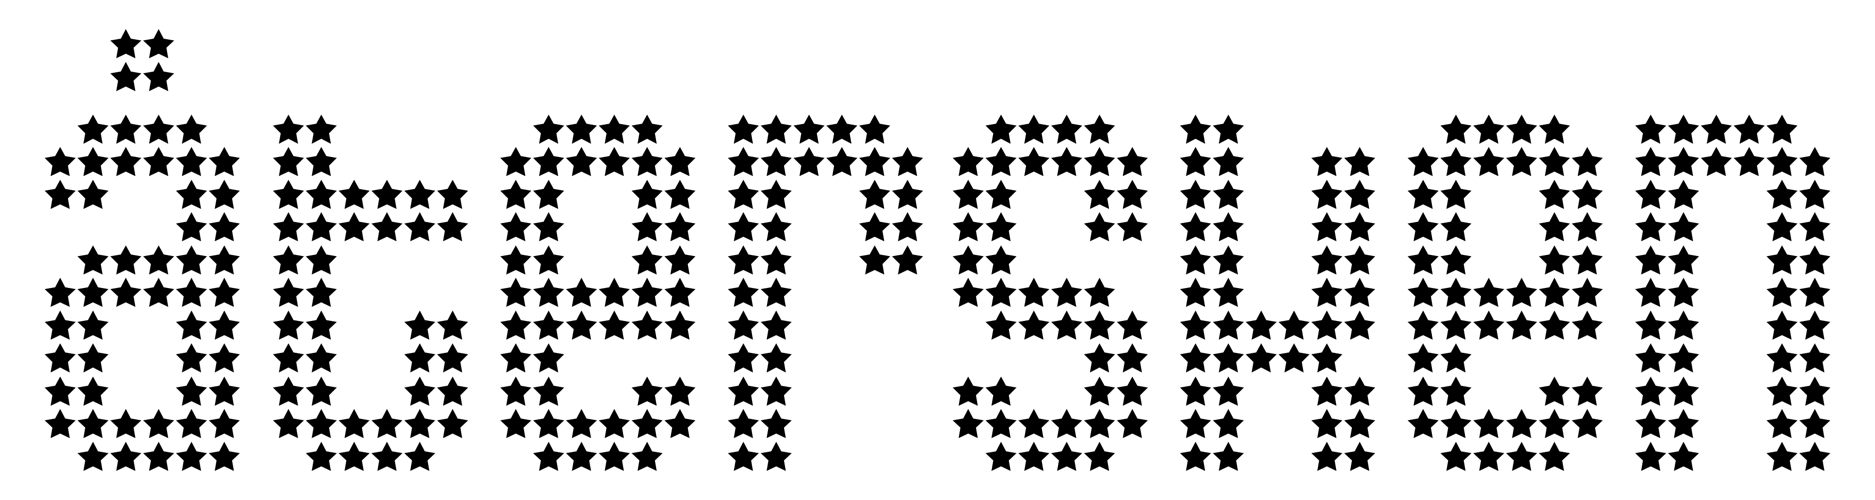 atersken logo black